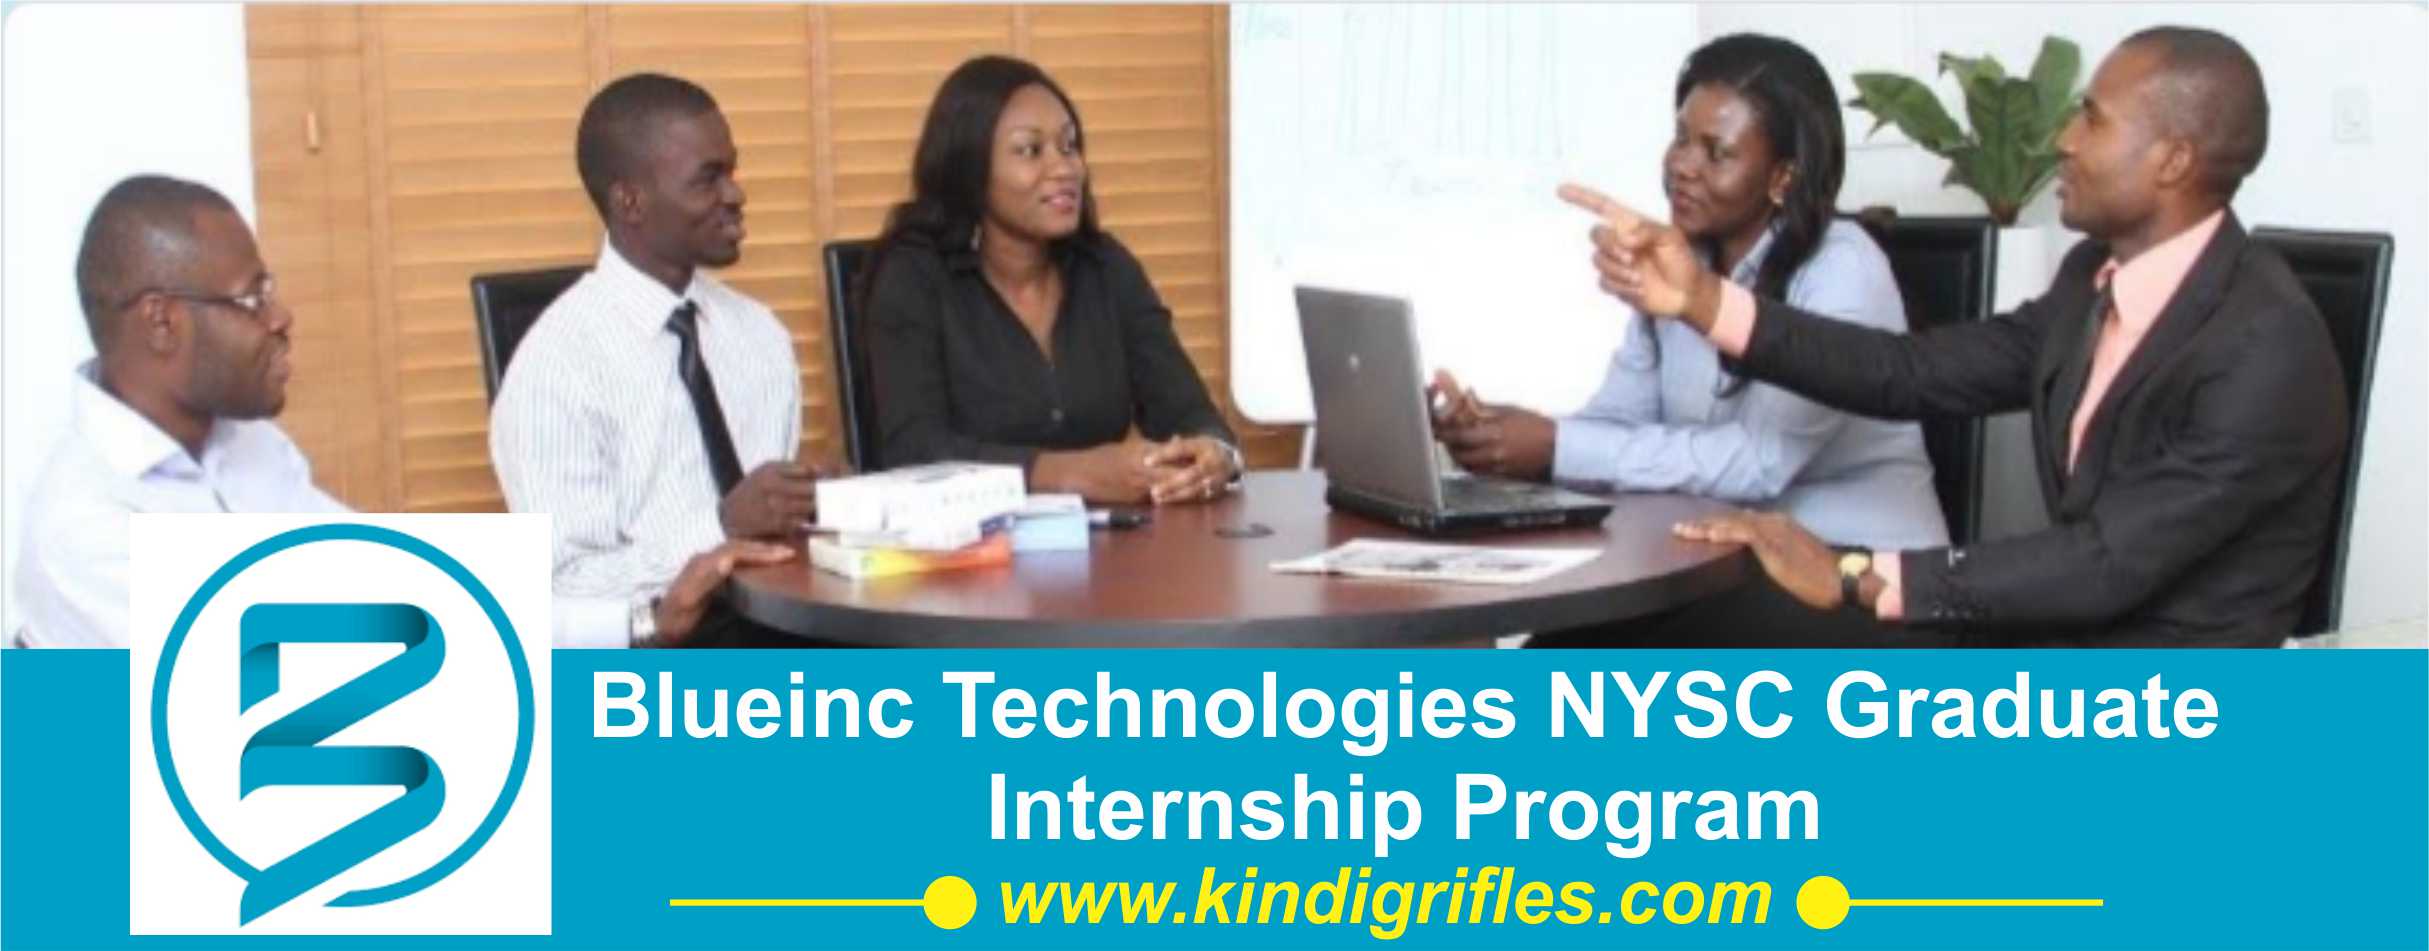 Blueinc Technologies NYSC Graduate Internship Program